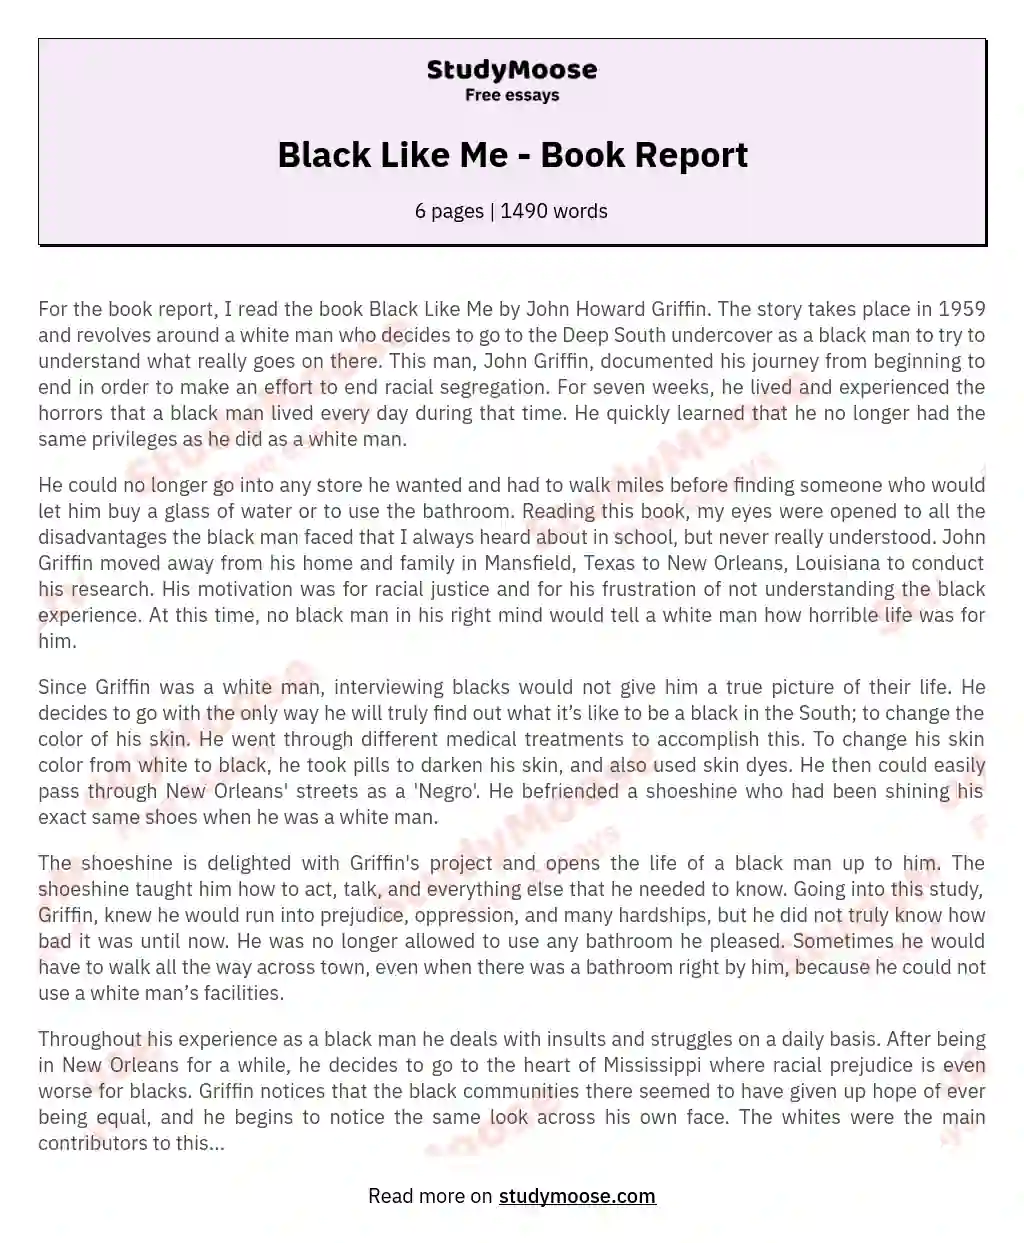 Black Like Me - Book Report